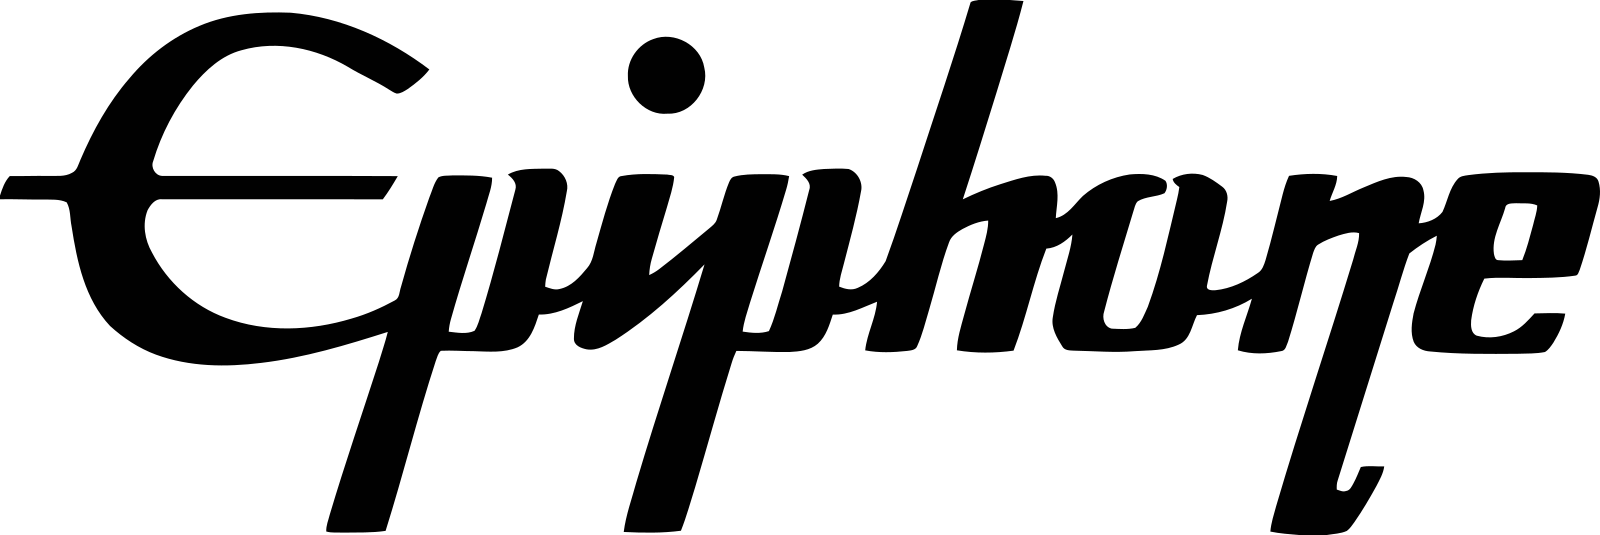 epiphone logo.